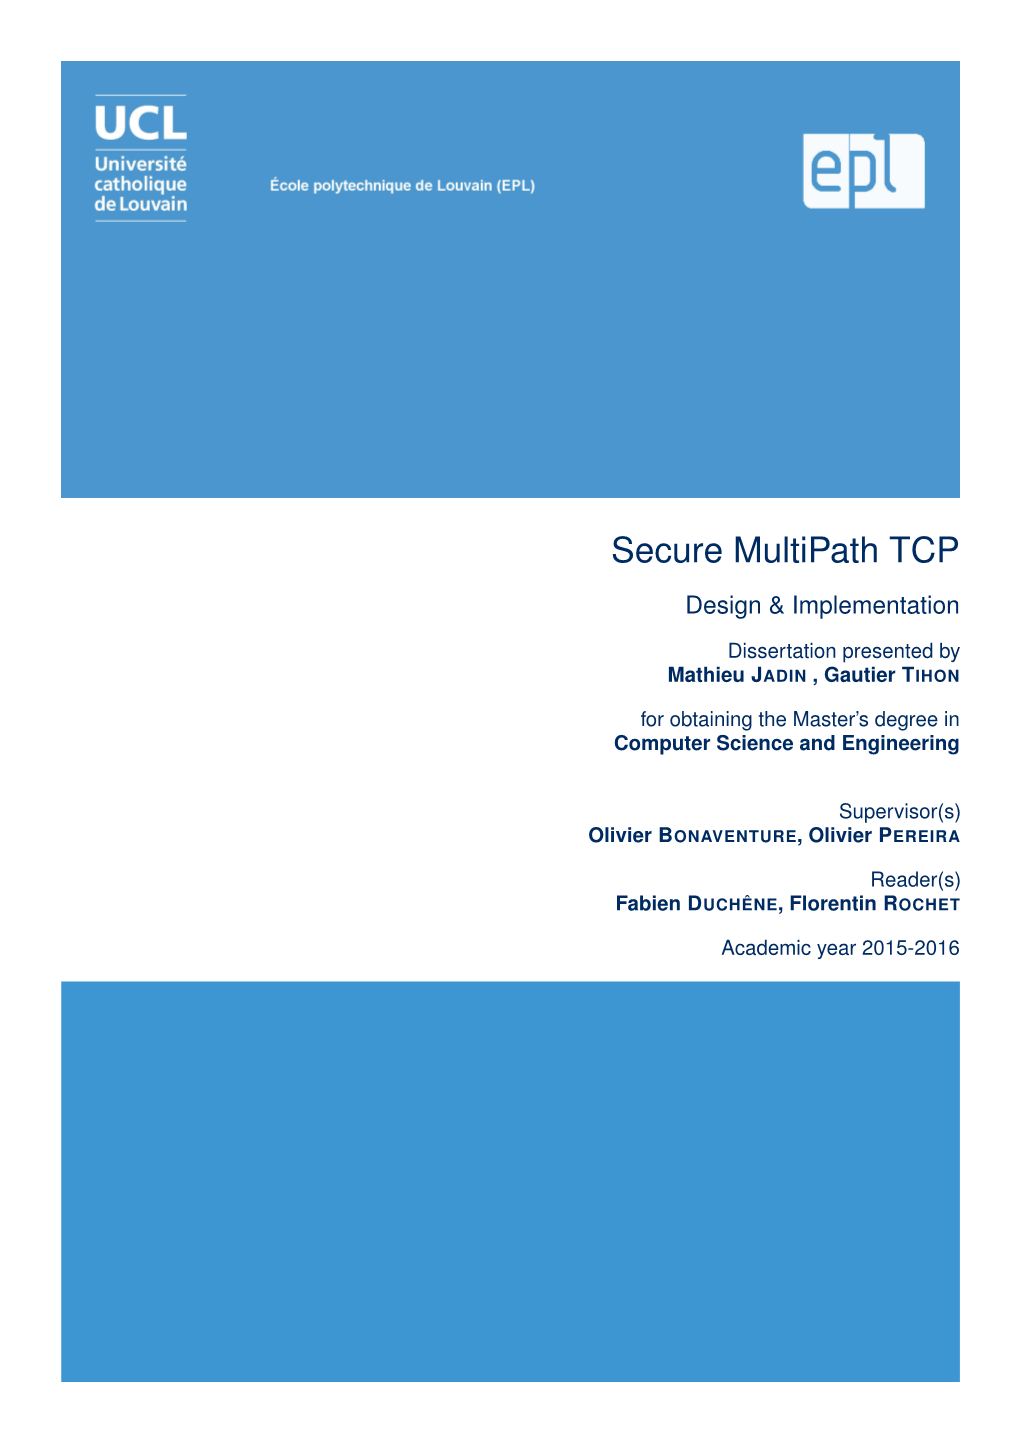 Secure Multipath TCP Design & Implementation